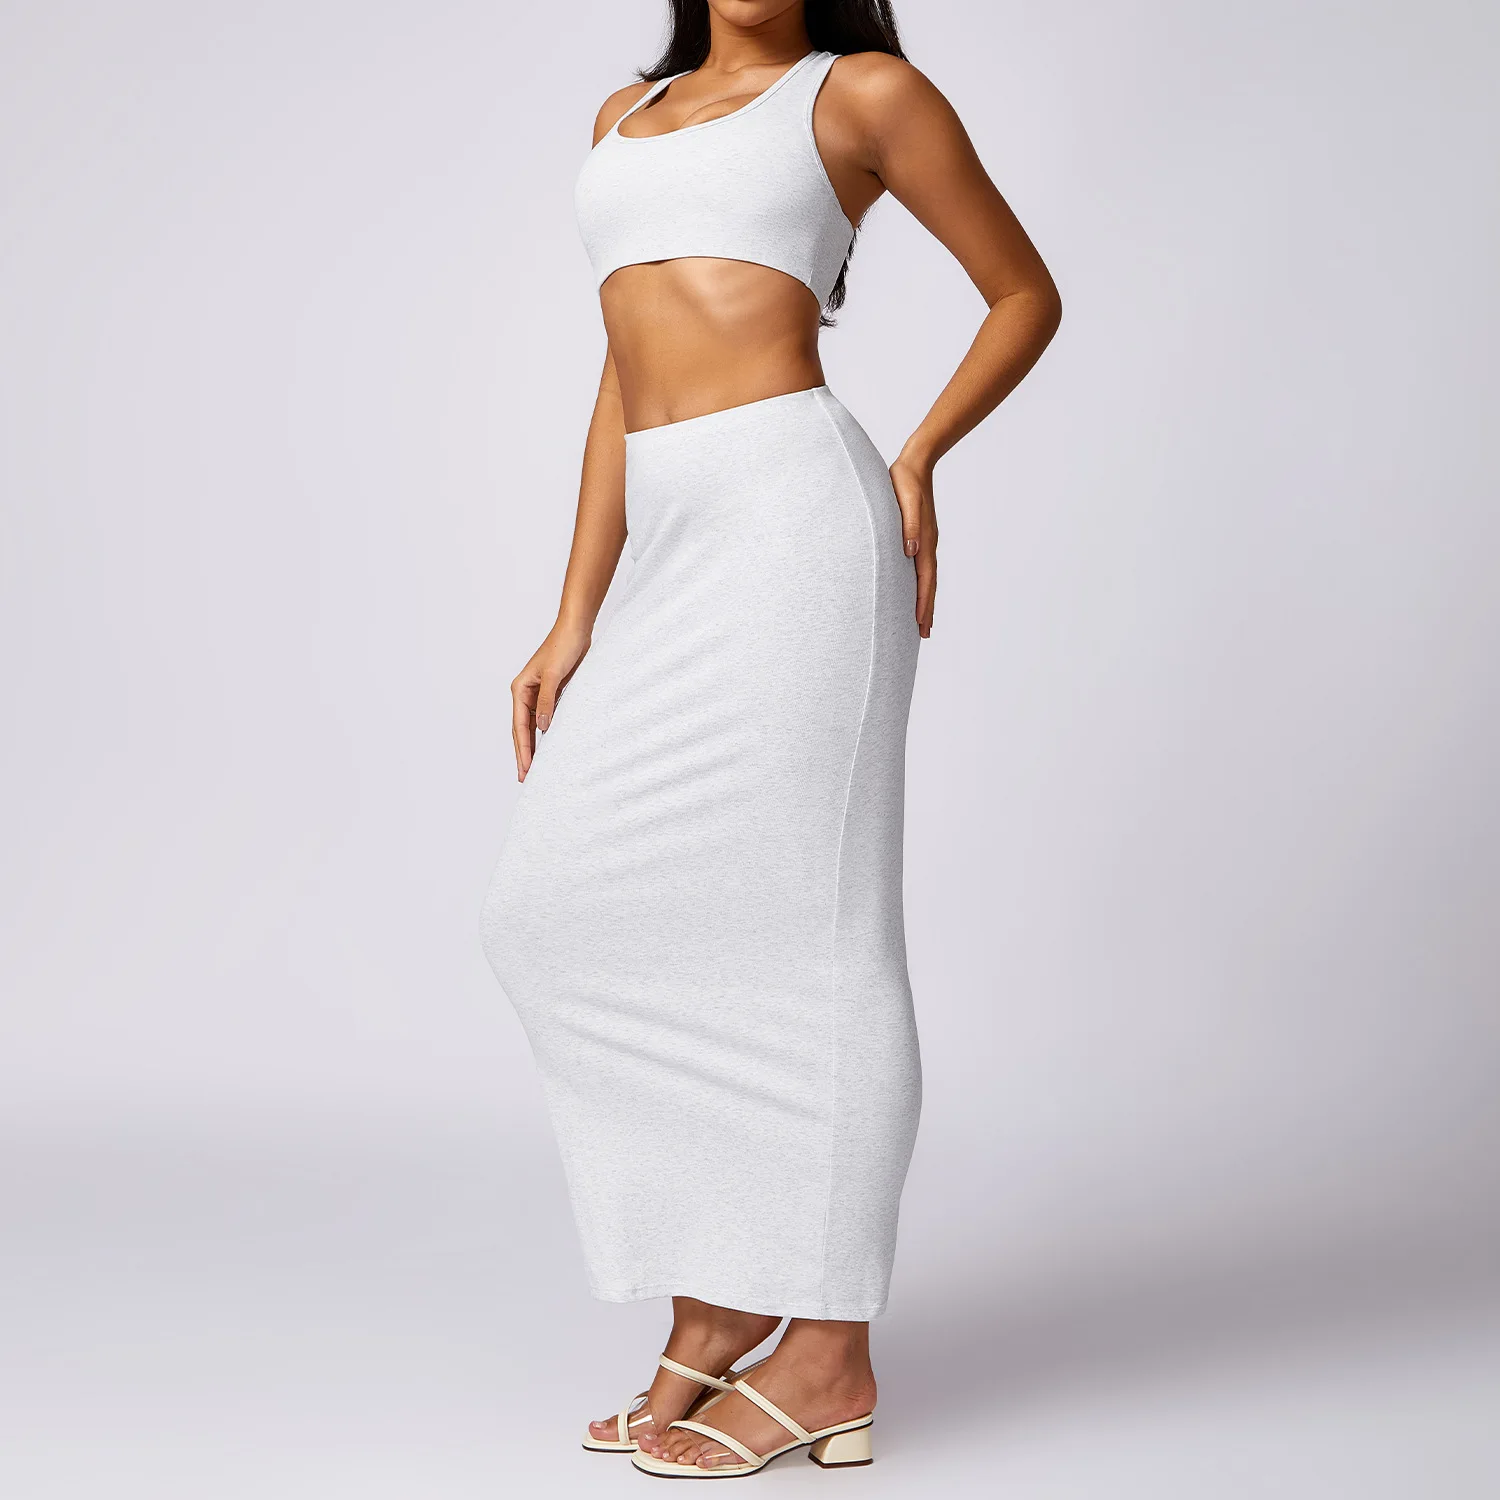 New Arrivals Crop Tops Plus Size Active Sport Two Piece Long Skirt Set Gym Sportswear Women Boutique Cloth